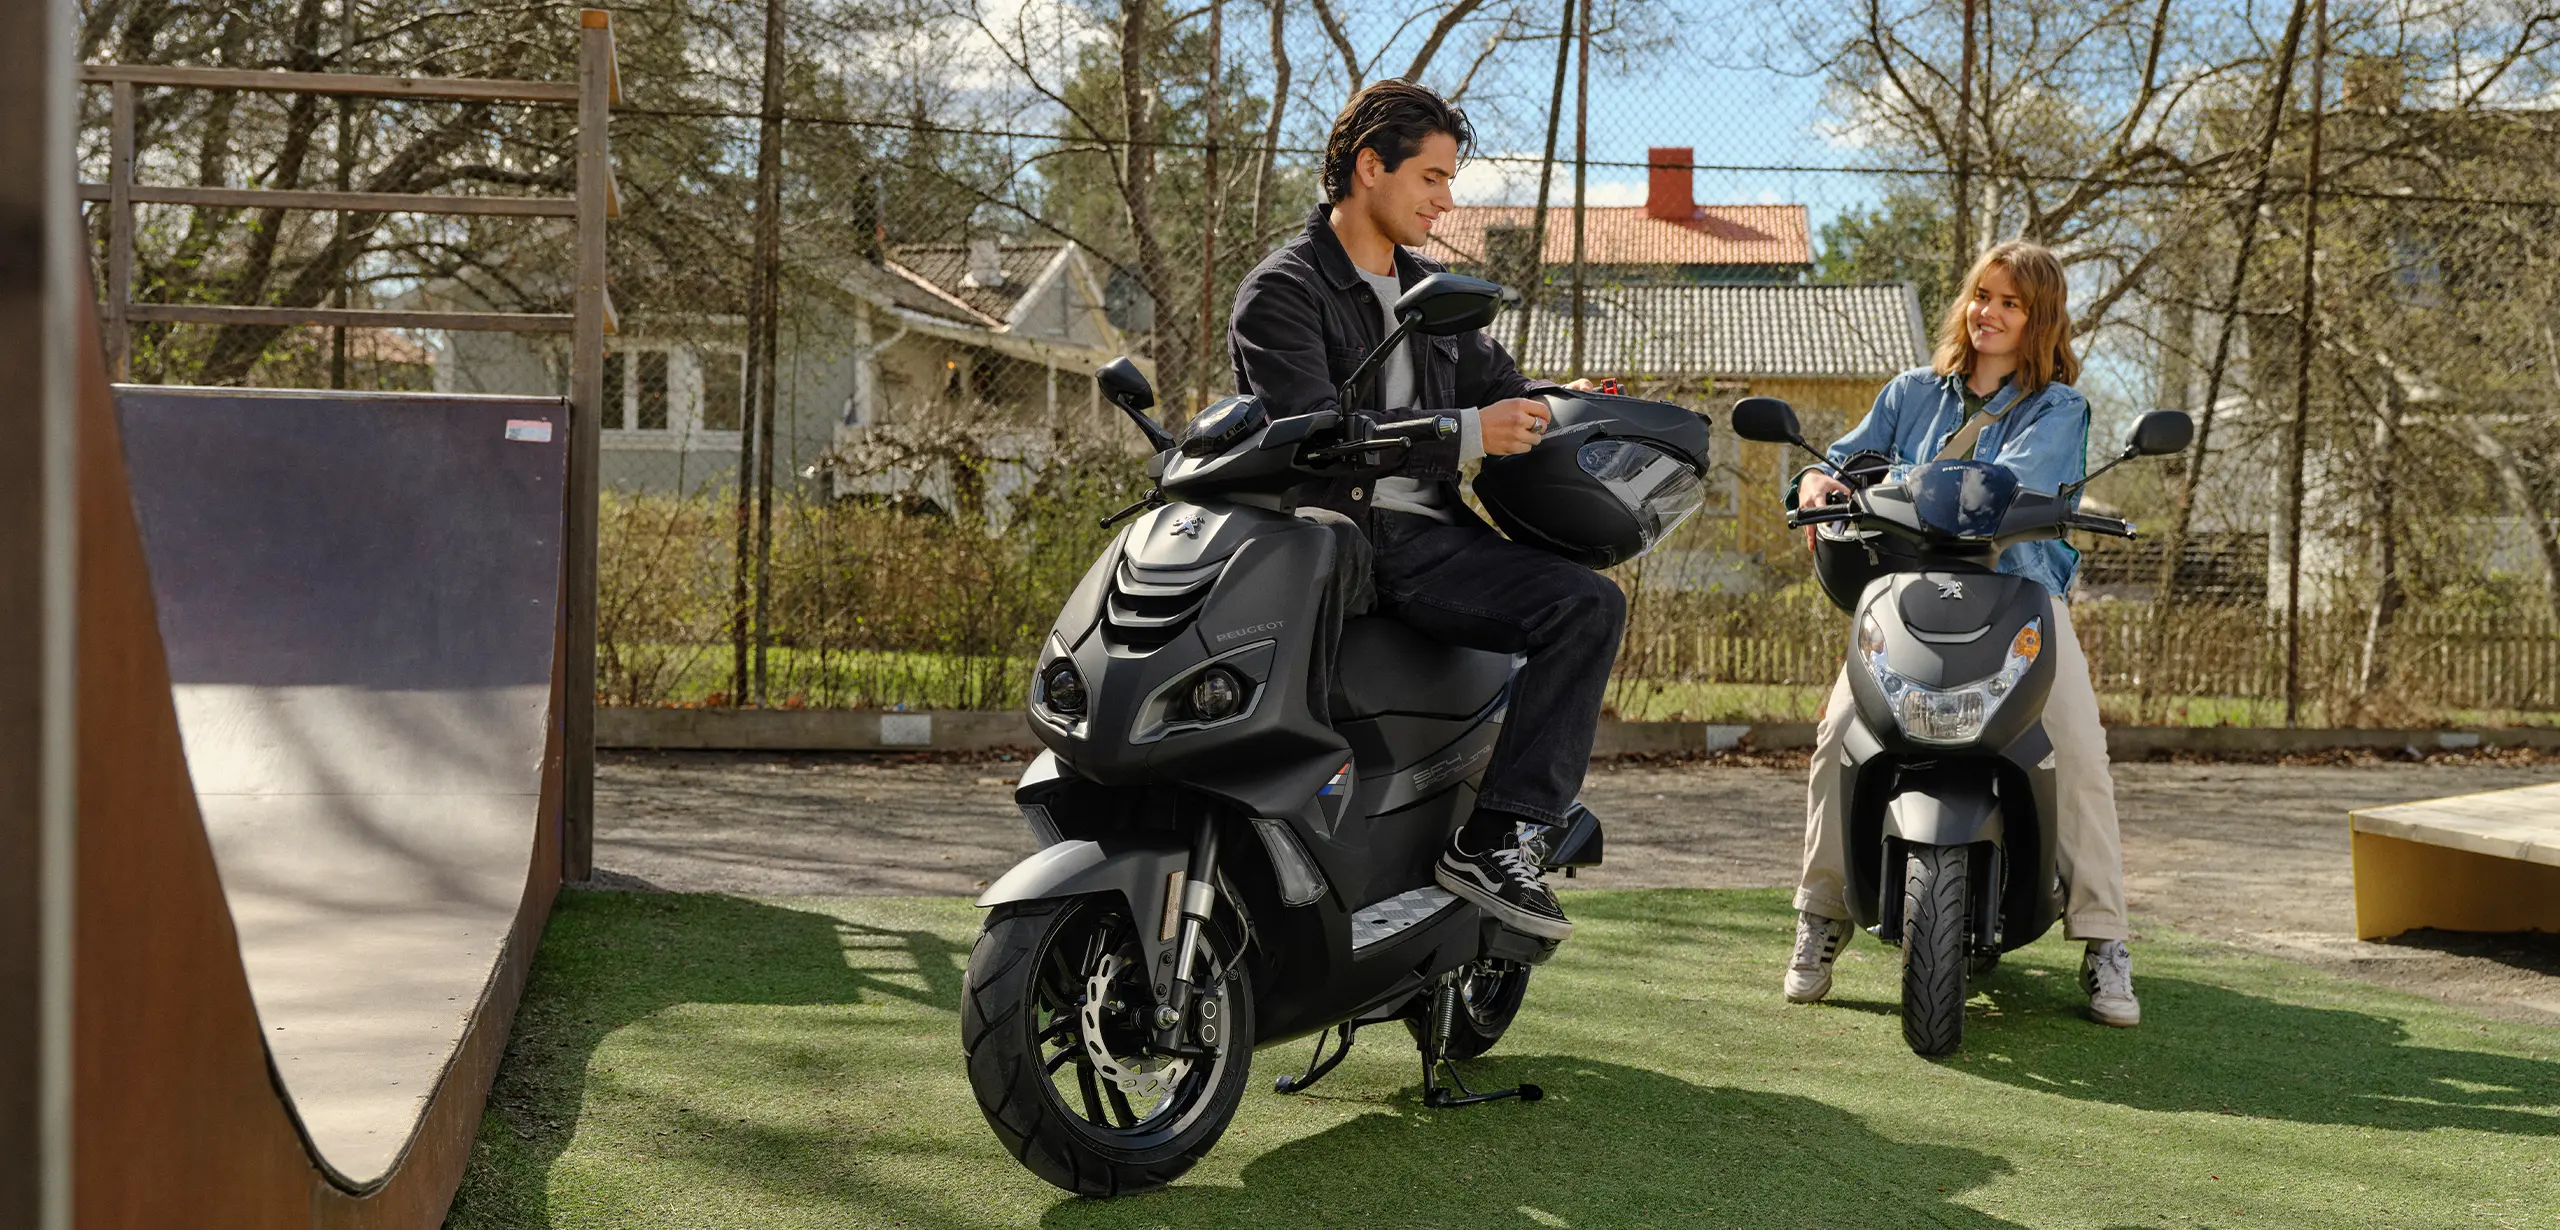 Peugeot Speedfight - populär EU-moped